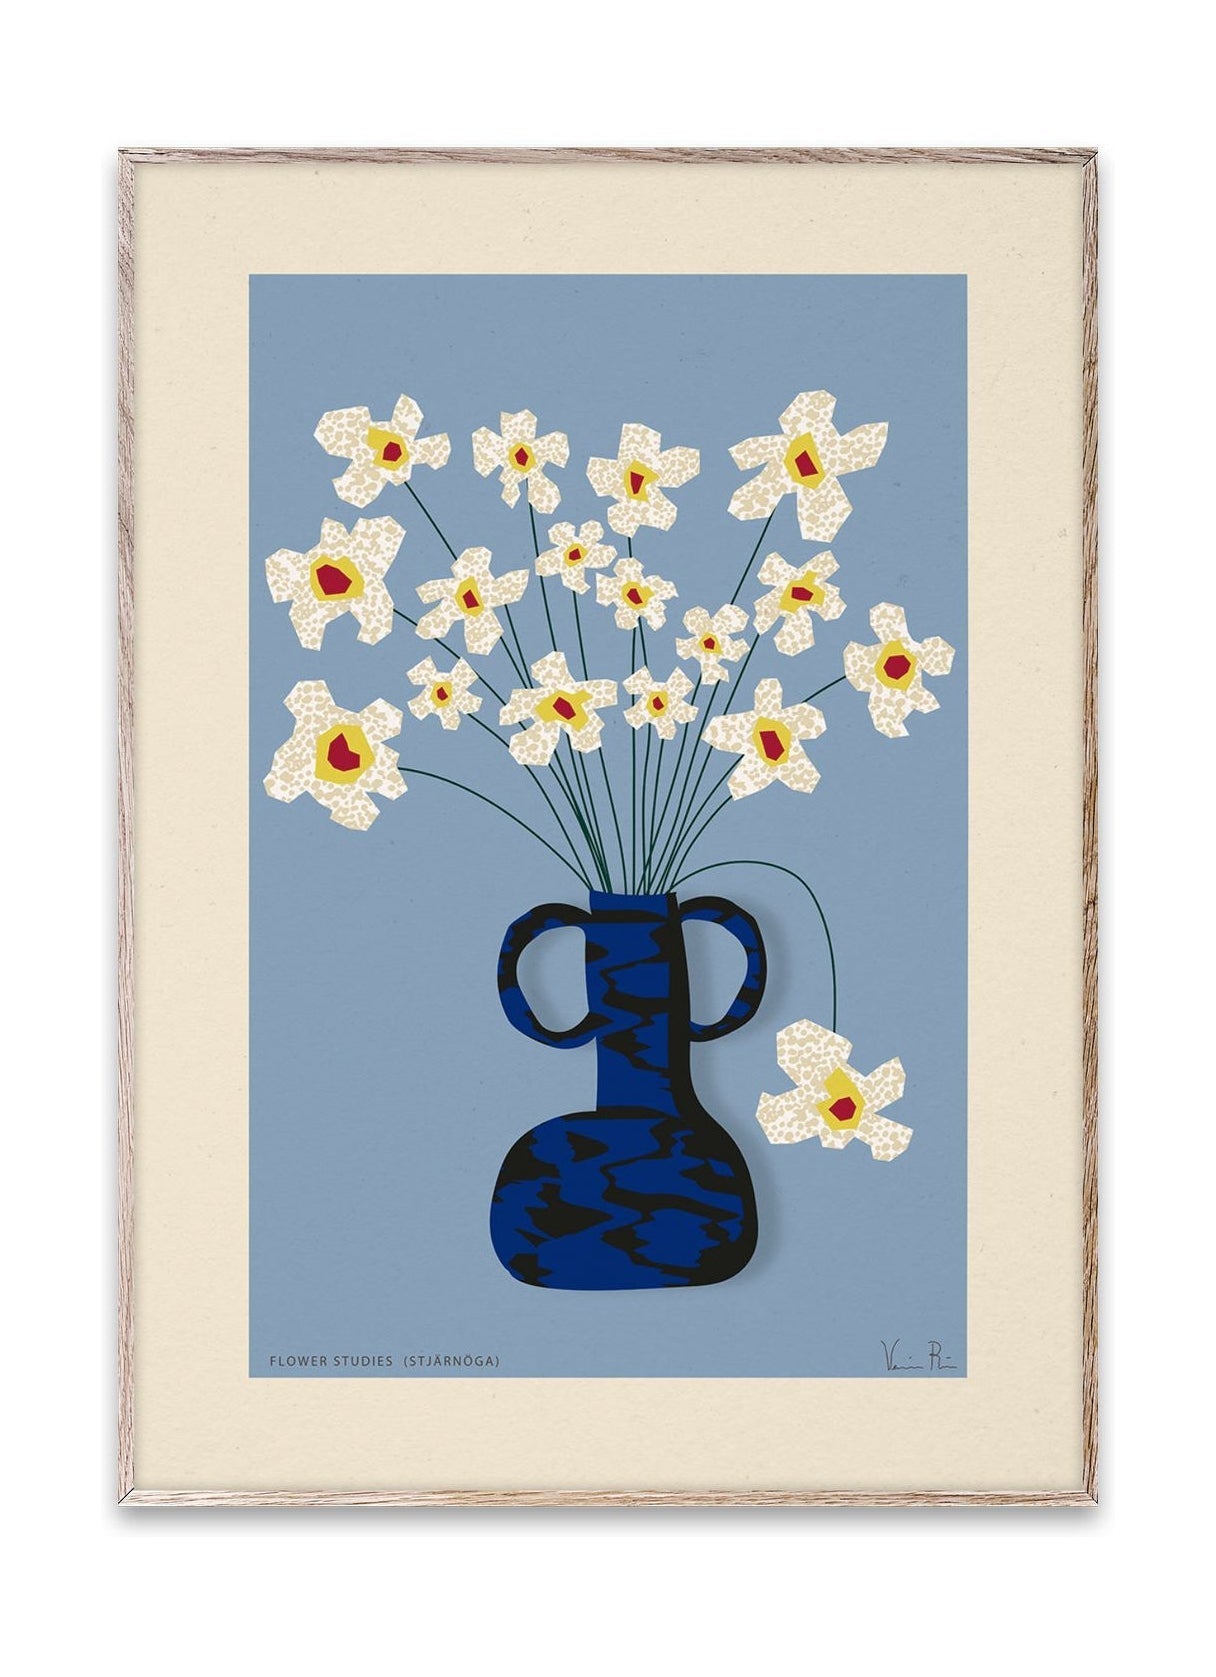 Paper Collective Flower Studies 04 (Stjärnöga) Poster, 30x40 Cm